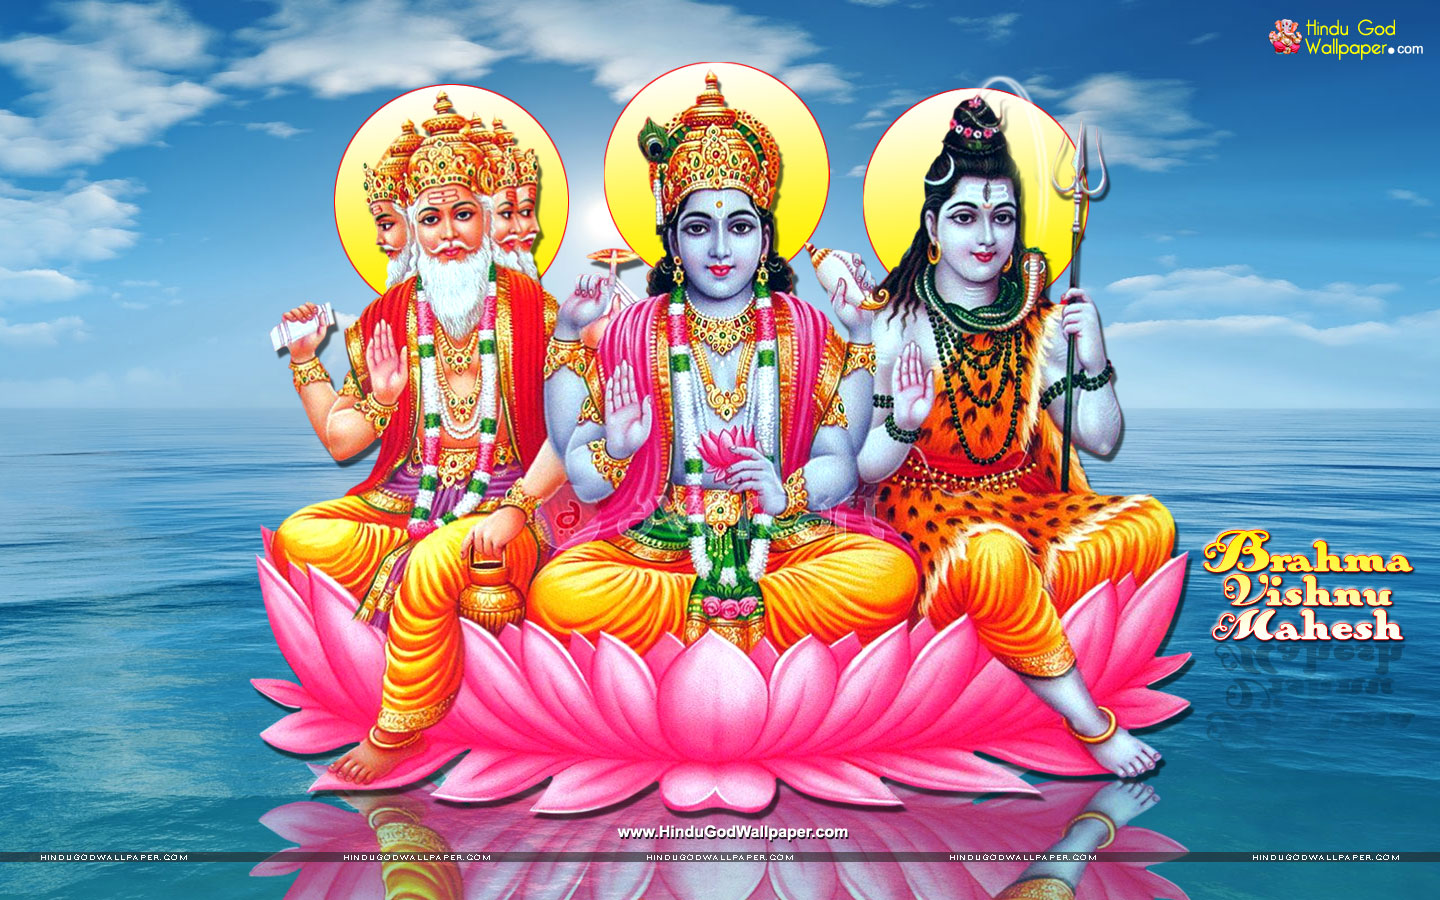 Hindu God Brahma Vishnu Mahesh Pictures - Lord Brahma Vishnu Shiva , HD Wallpaper & Backgrounds